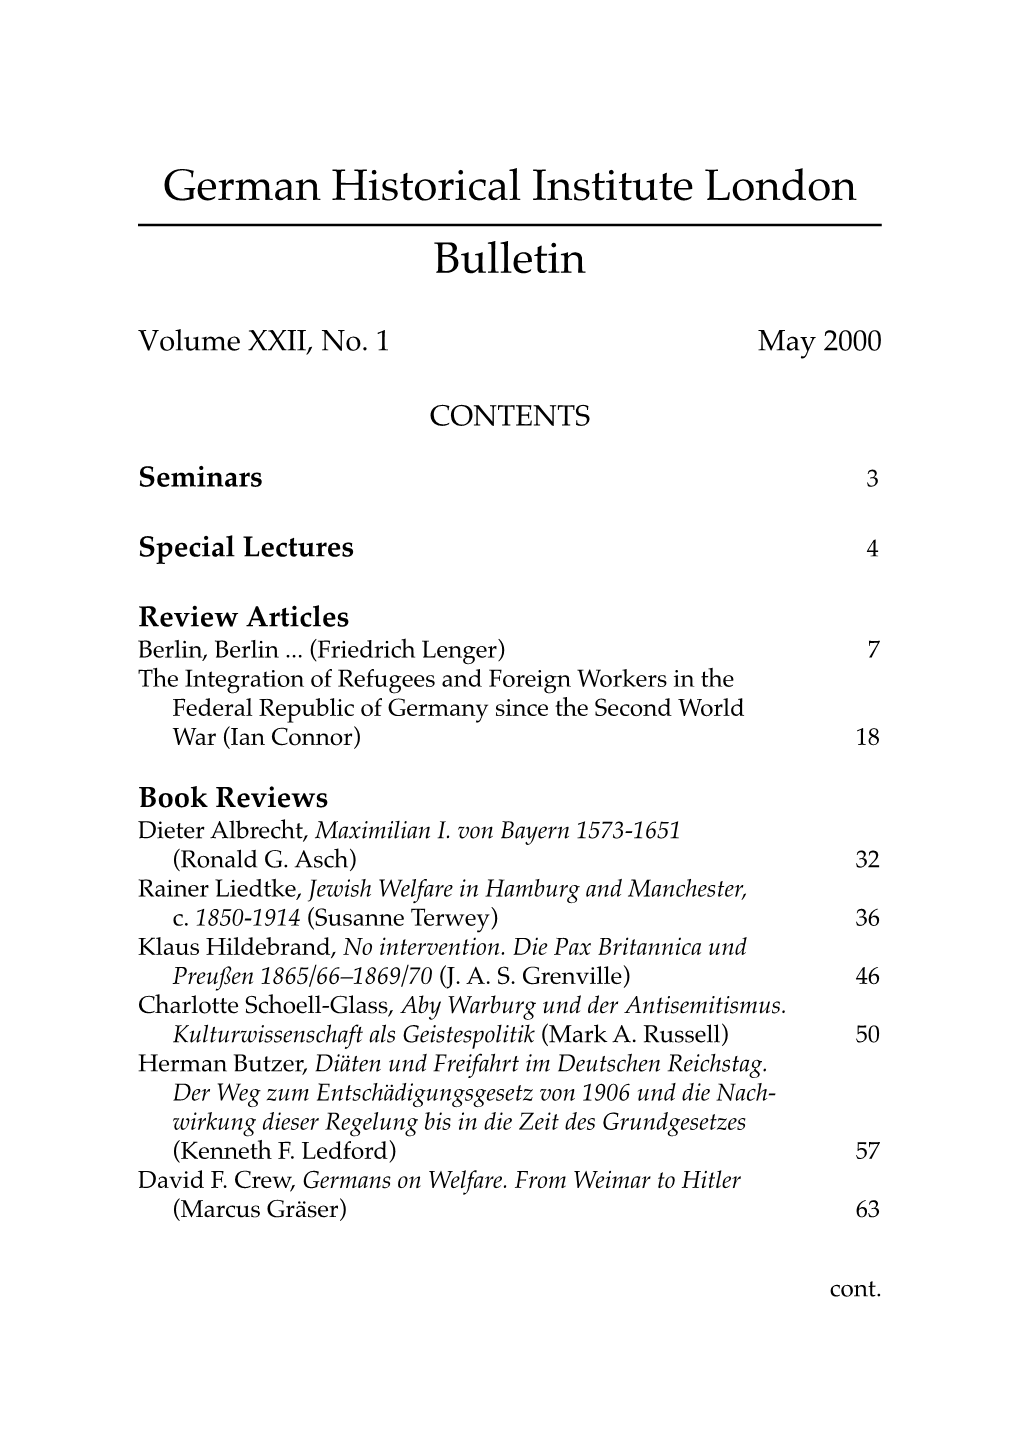 German Historical Institute London Bulletin Vol 22 (2000), No. 1